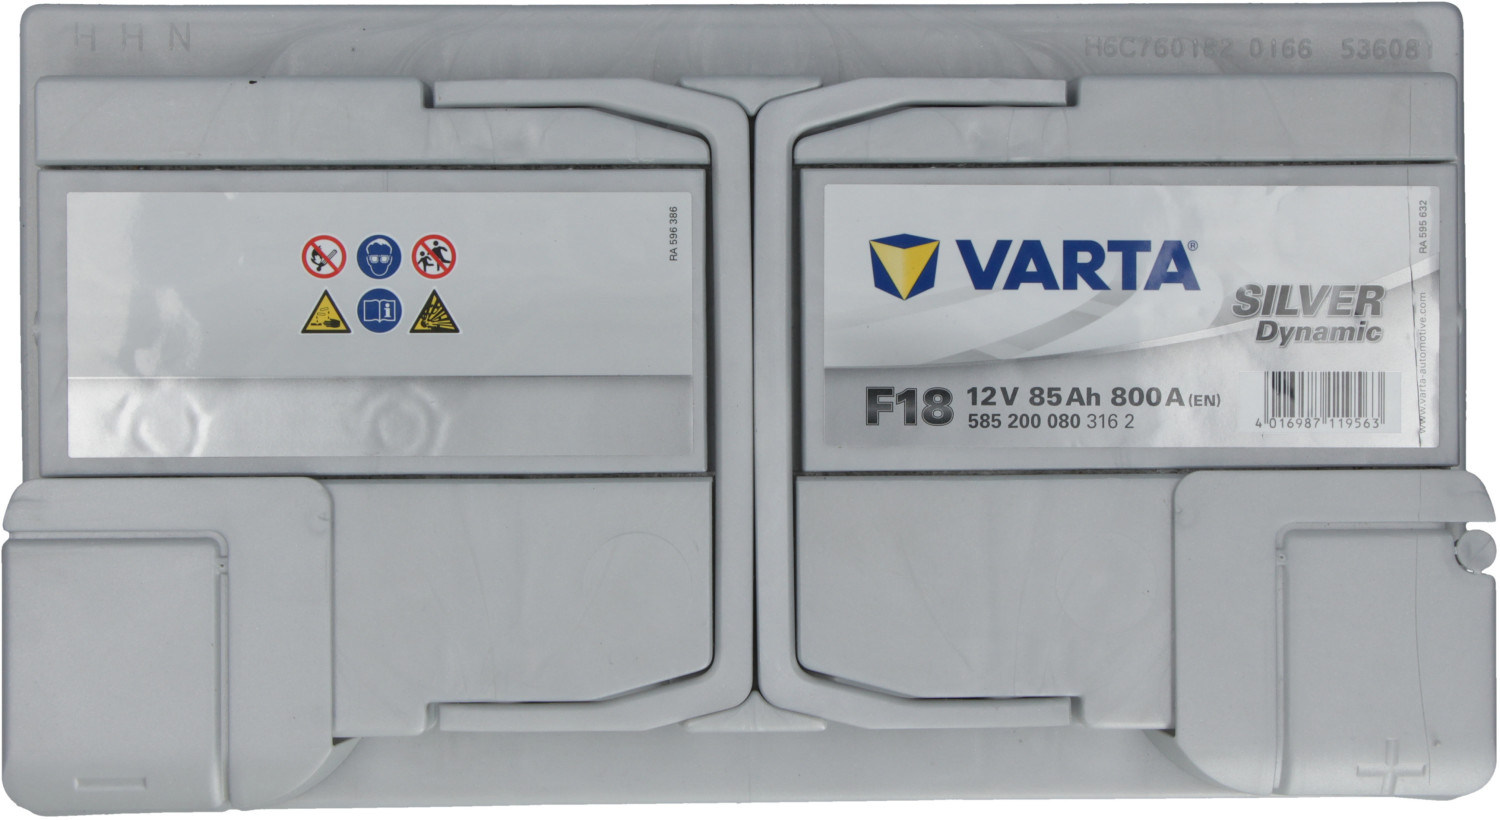 5852000803162 VARTA F18 SILVER dynamic F18 Batterie 12V 85Ah 800A